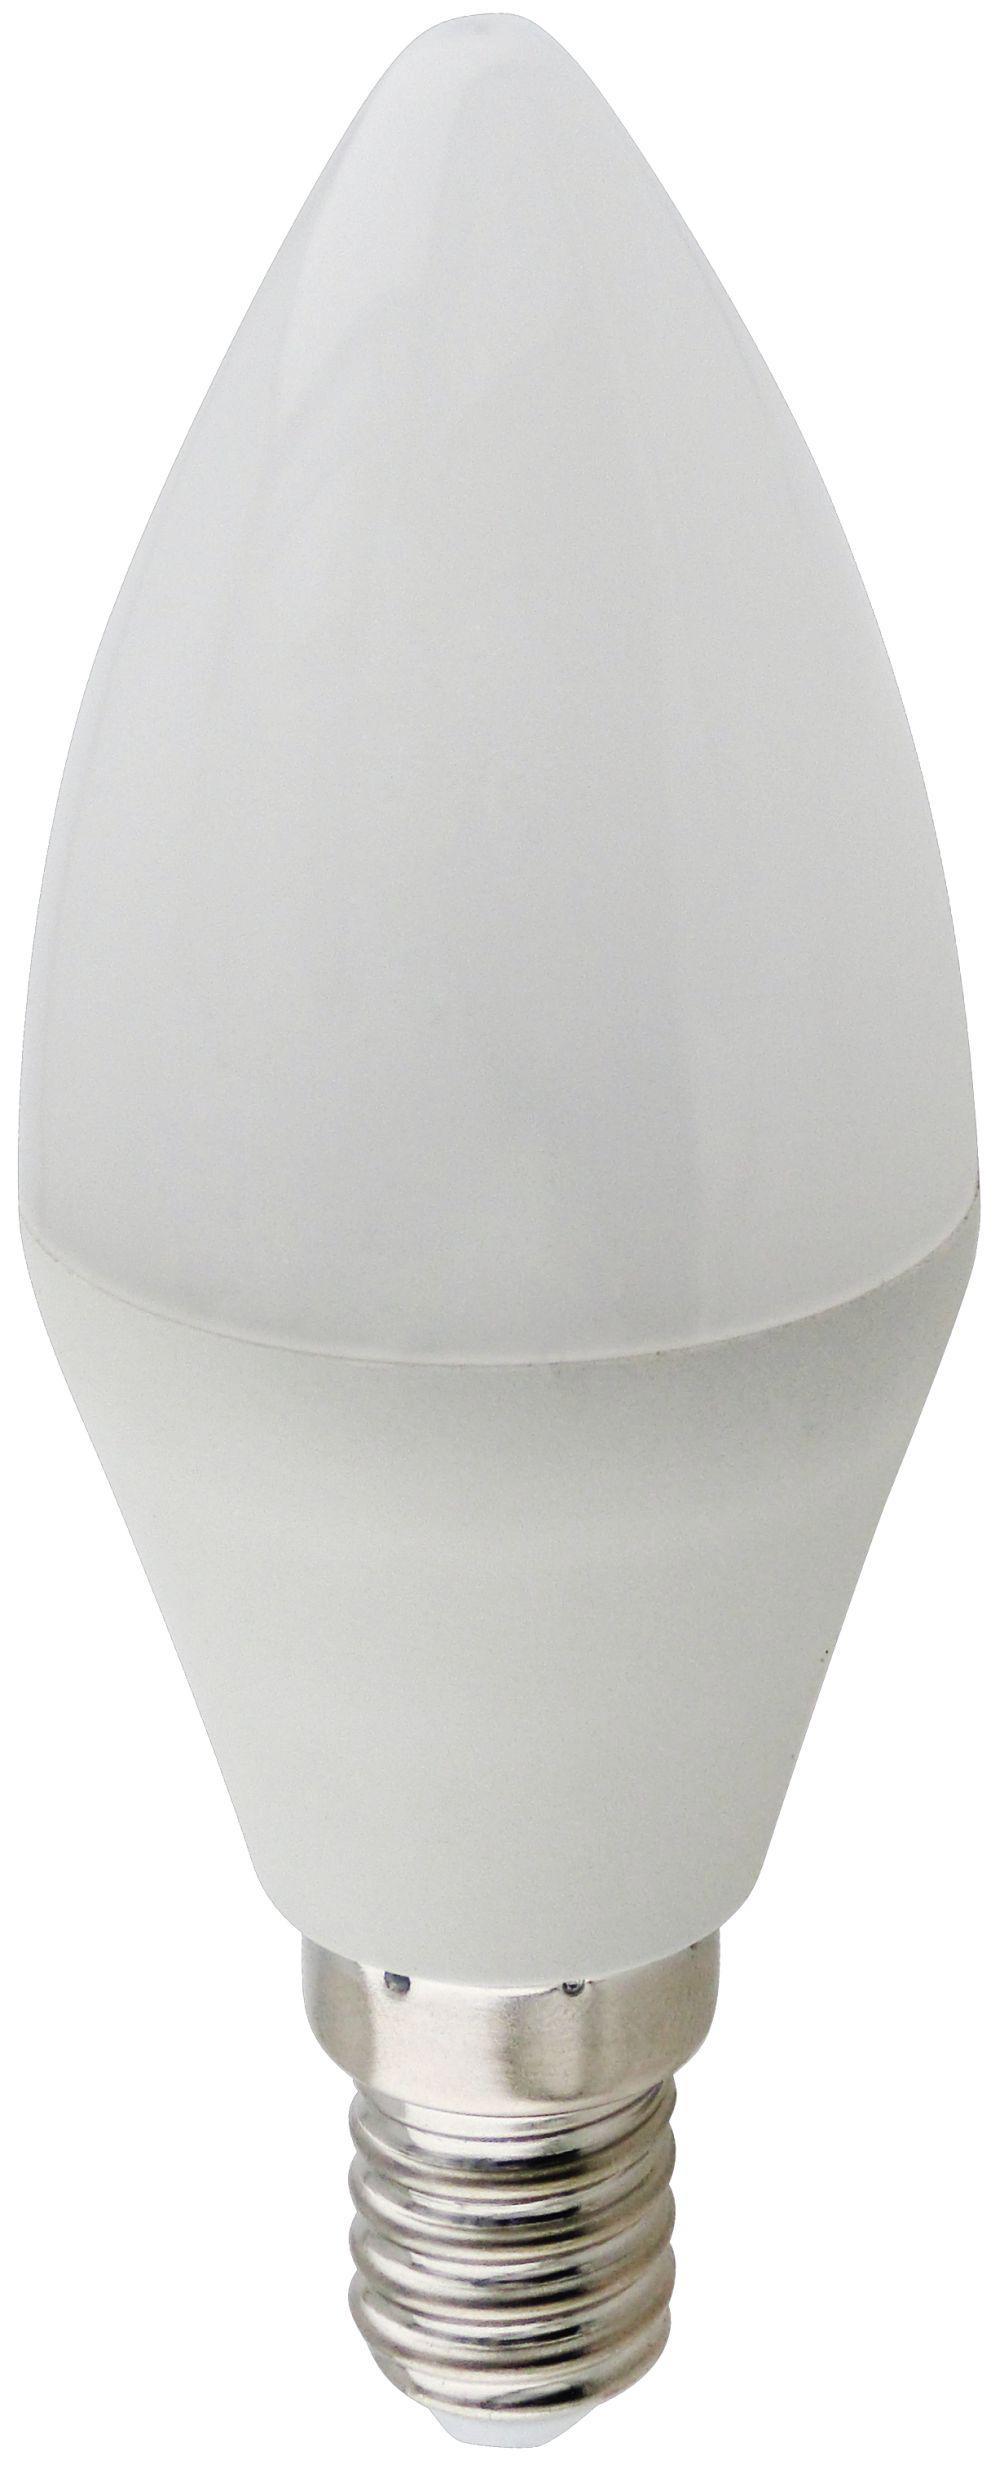 90121004 Лампа Premium светодионая E14 10 Вт свеча 800 Лм теплый свет STLM-0112254 ECOLA